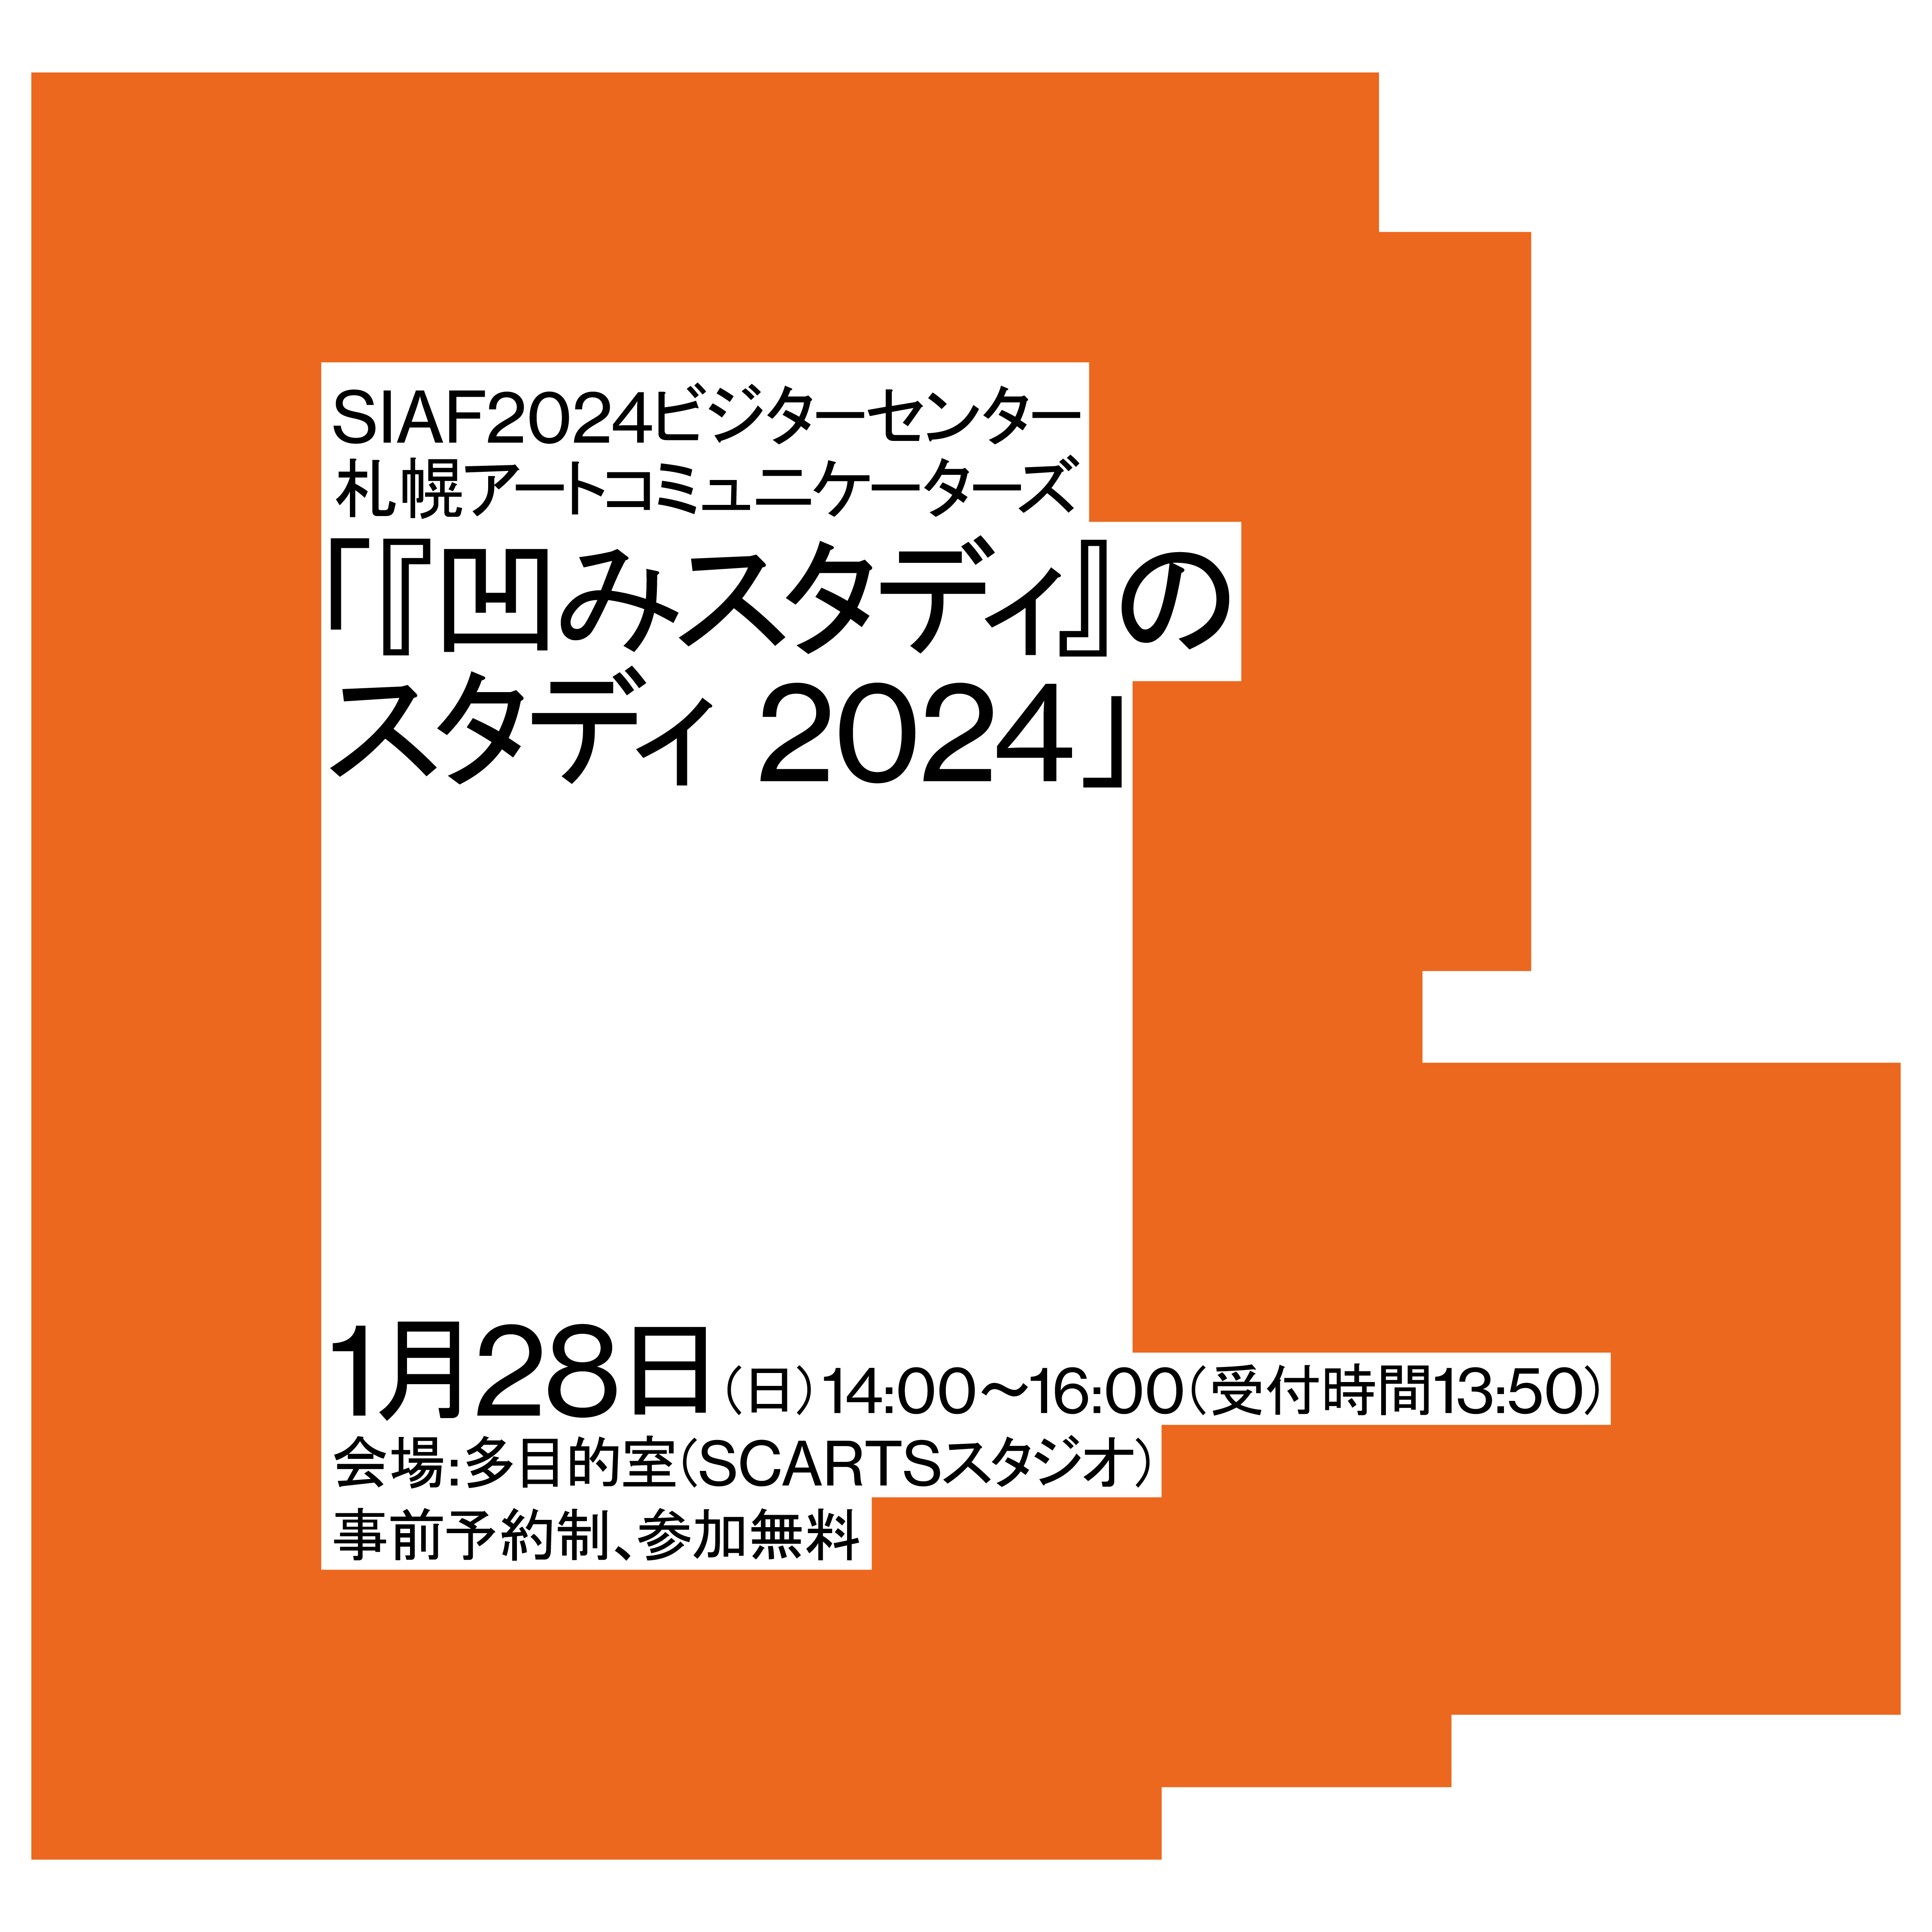 SIAF2024ビジターセンター札幌アートコミュニケーターズ『凹みスタディ』のスタディ2024イメージ